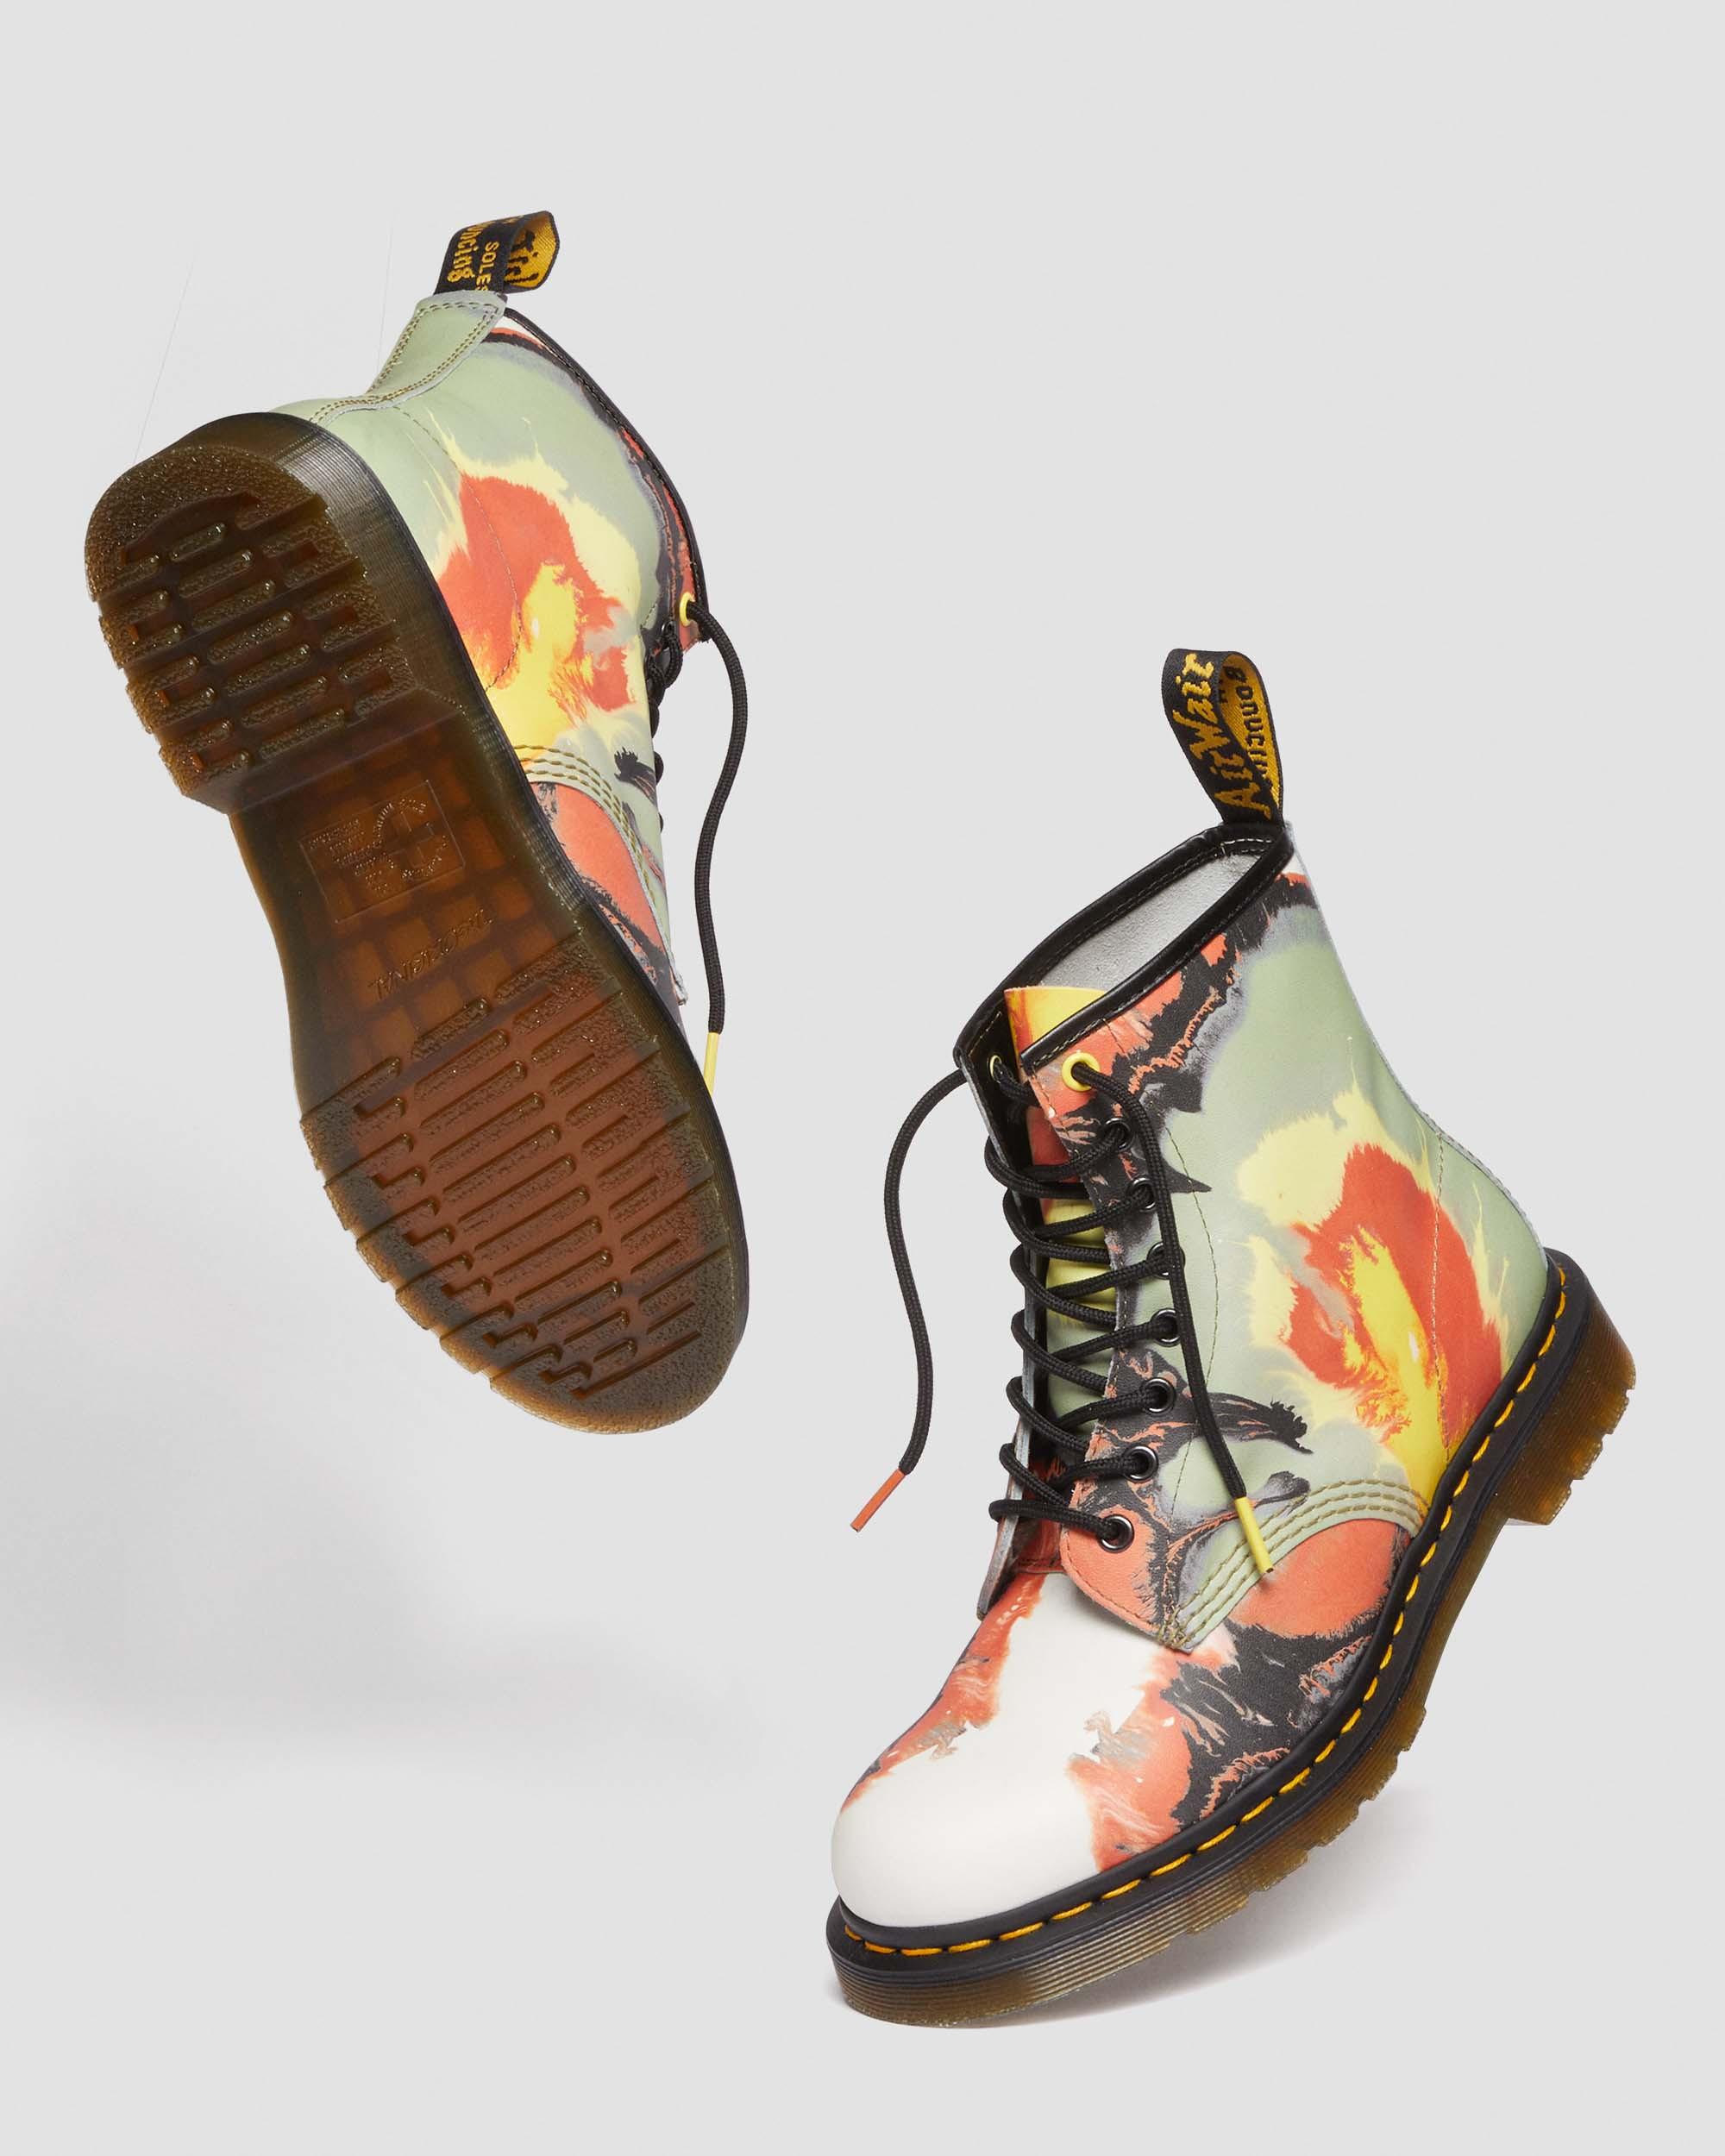 1460 Tate Flare Volcanic 皮靴